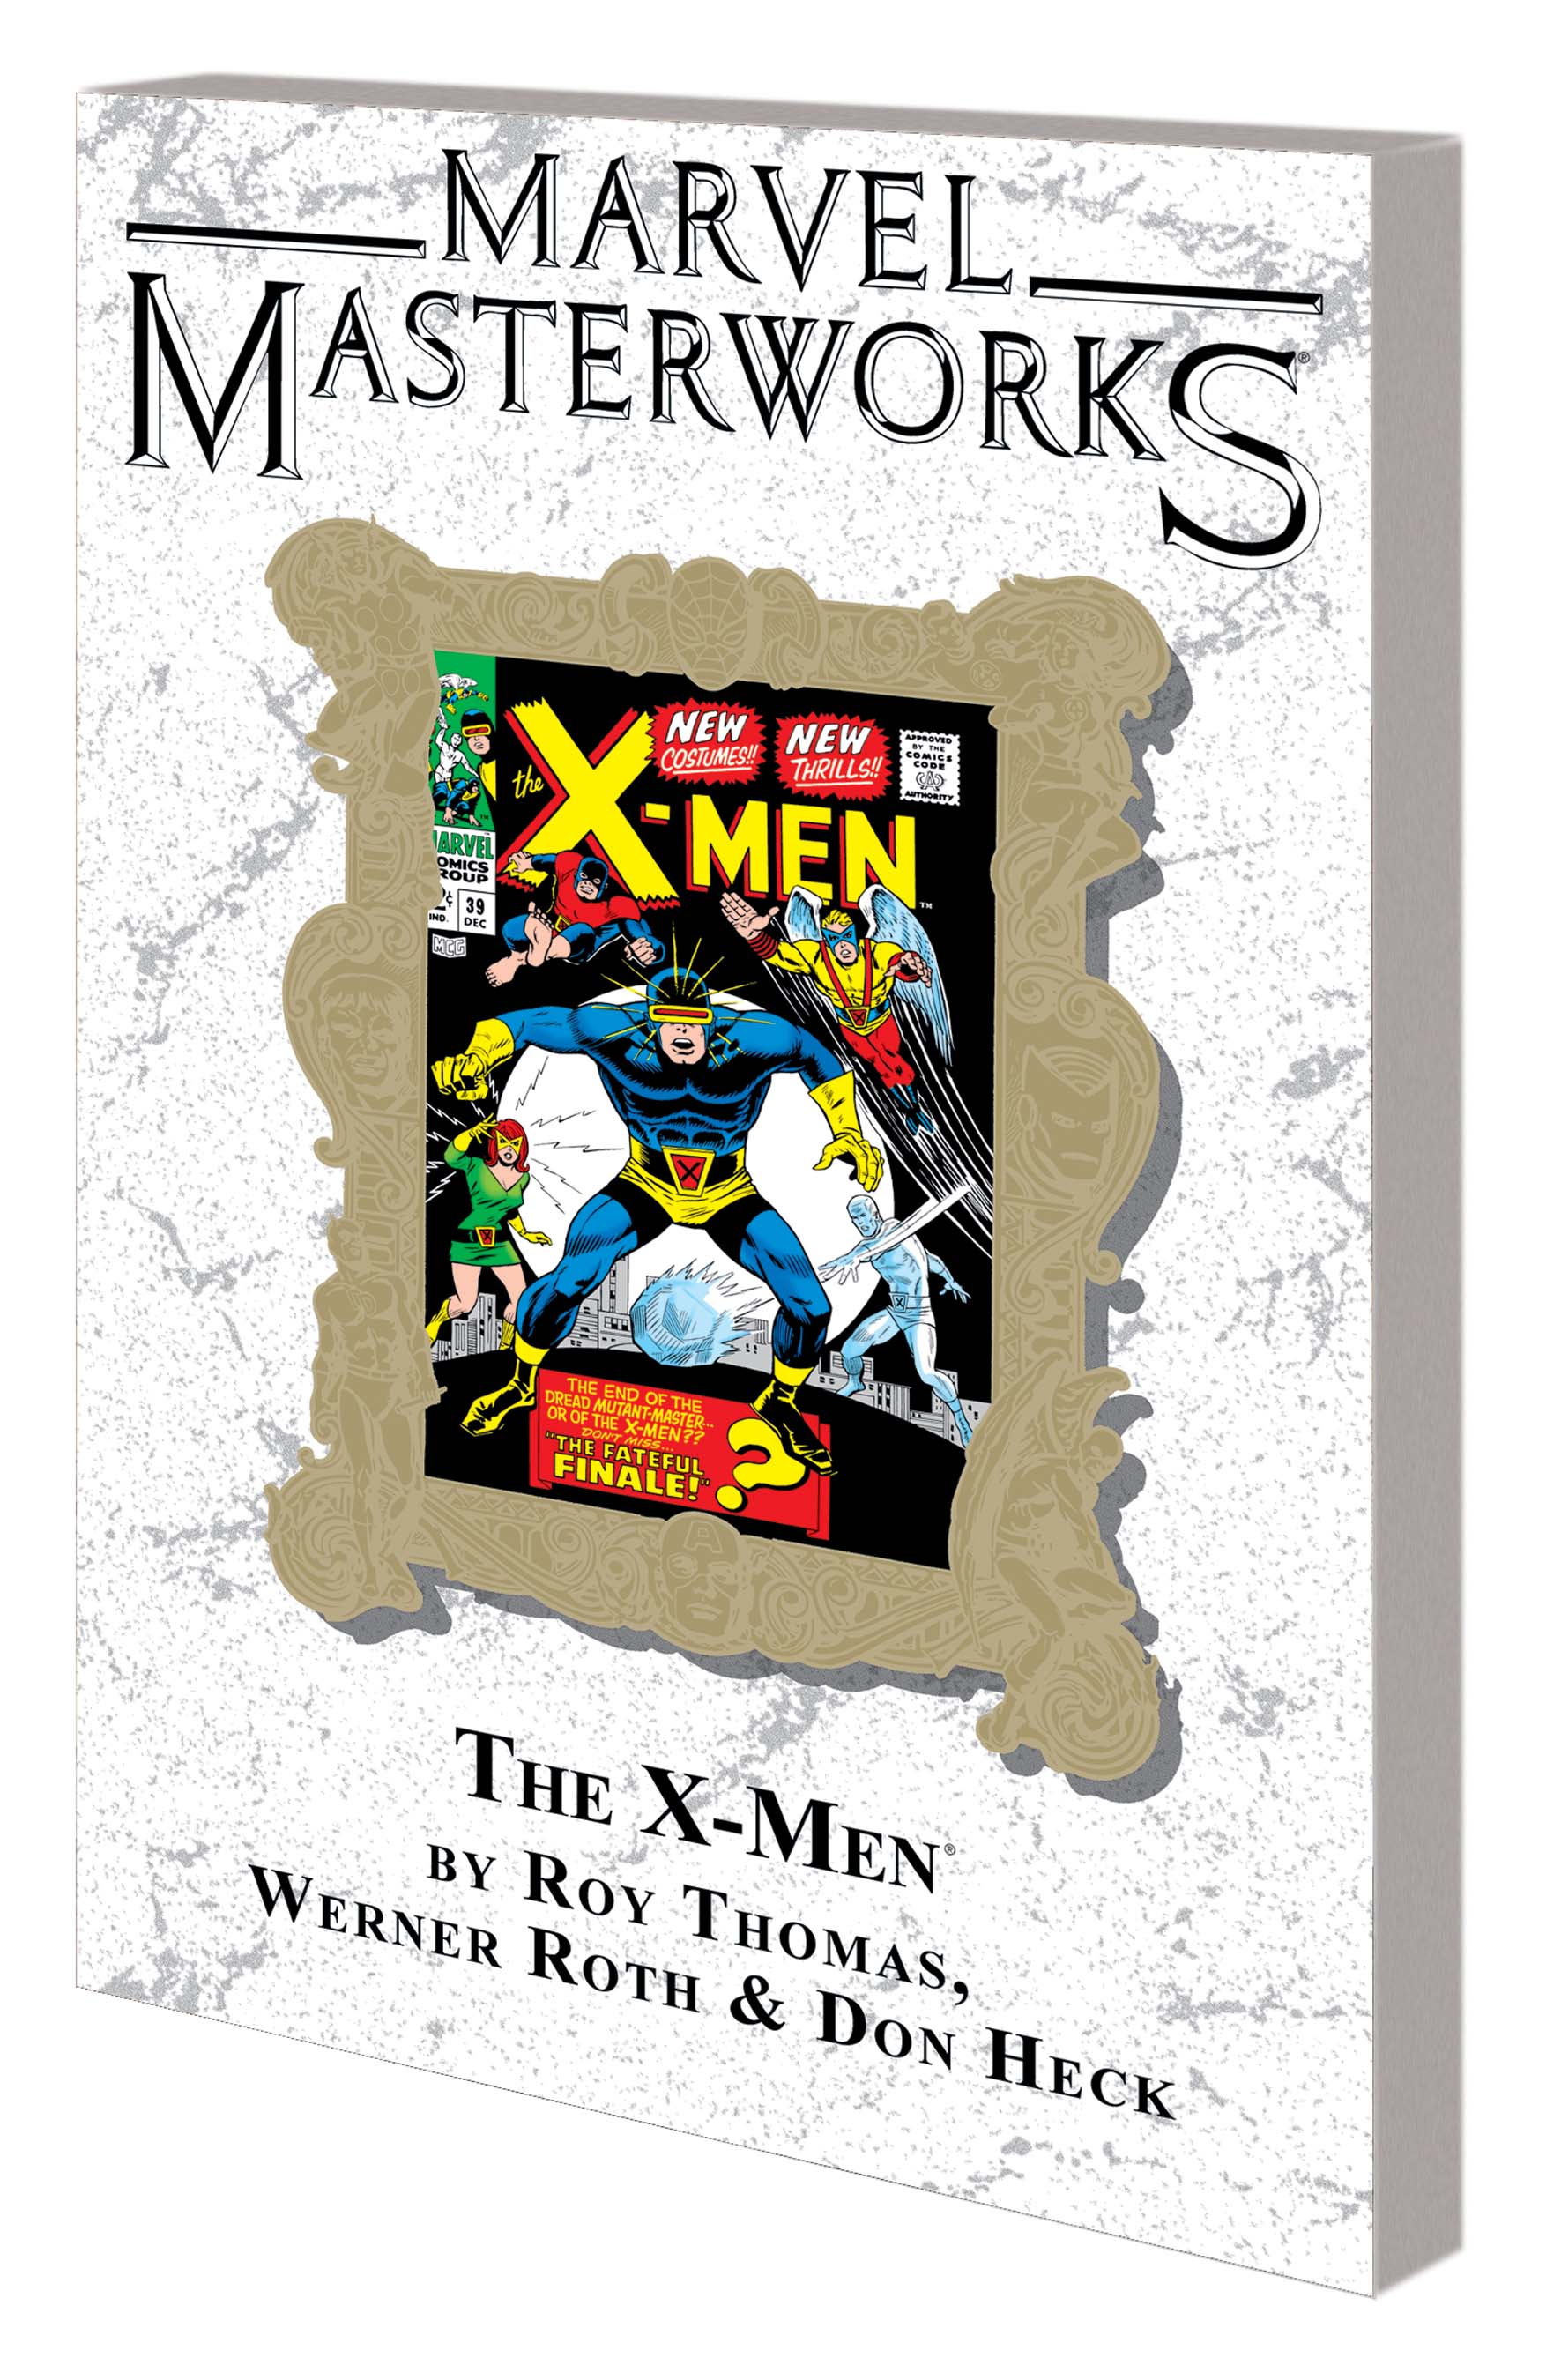 Marvel Masterworks: The X-Men Vol. 4 (Trade Paperback)